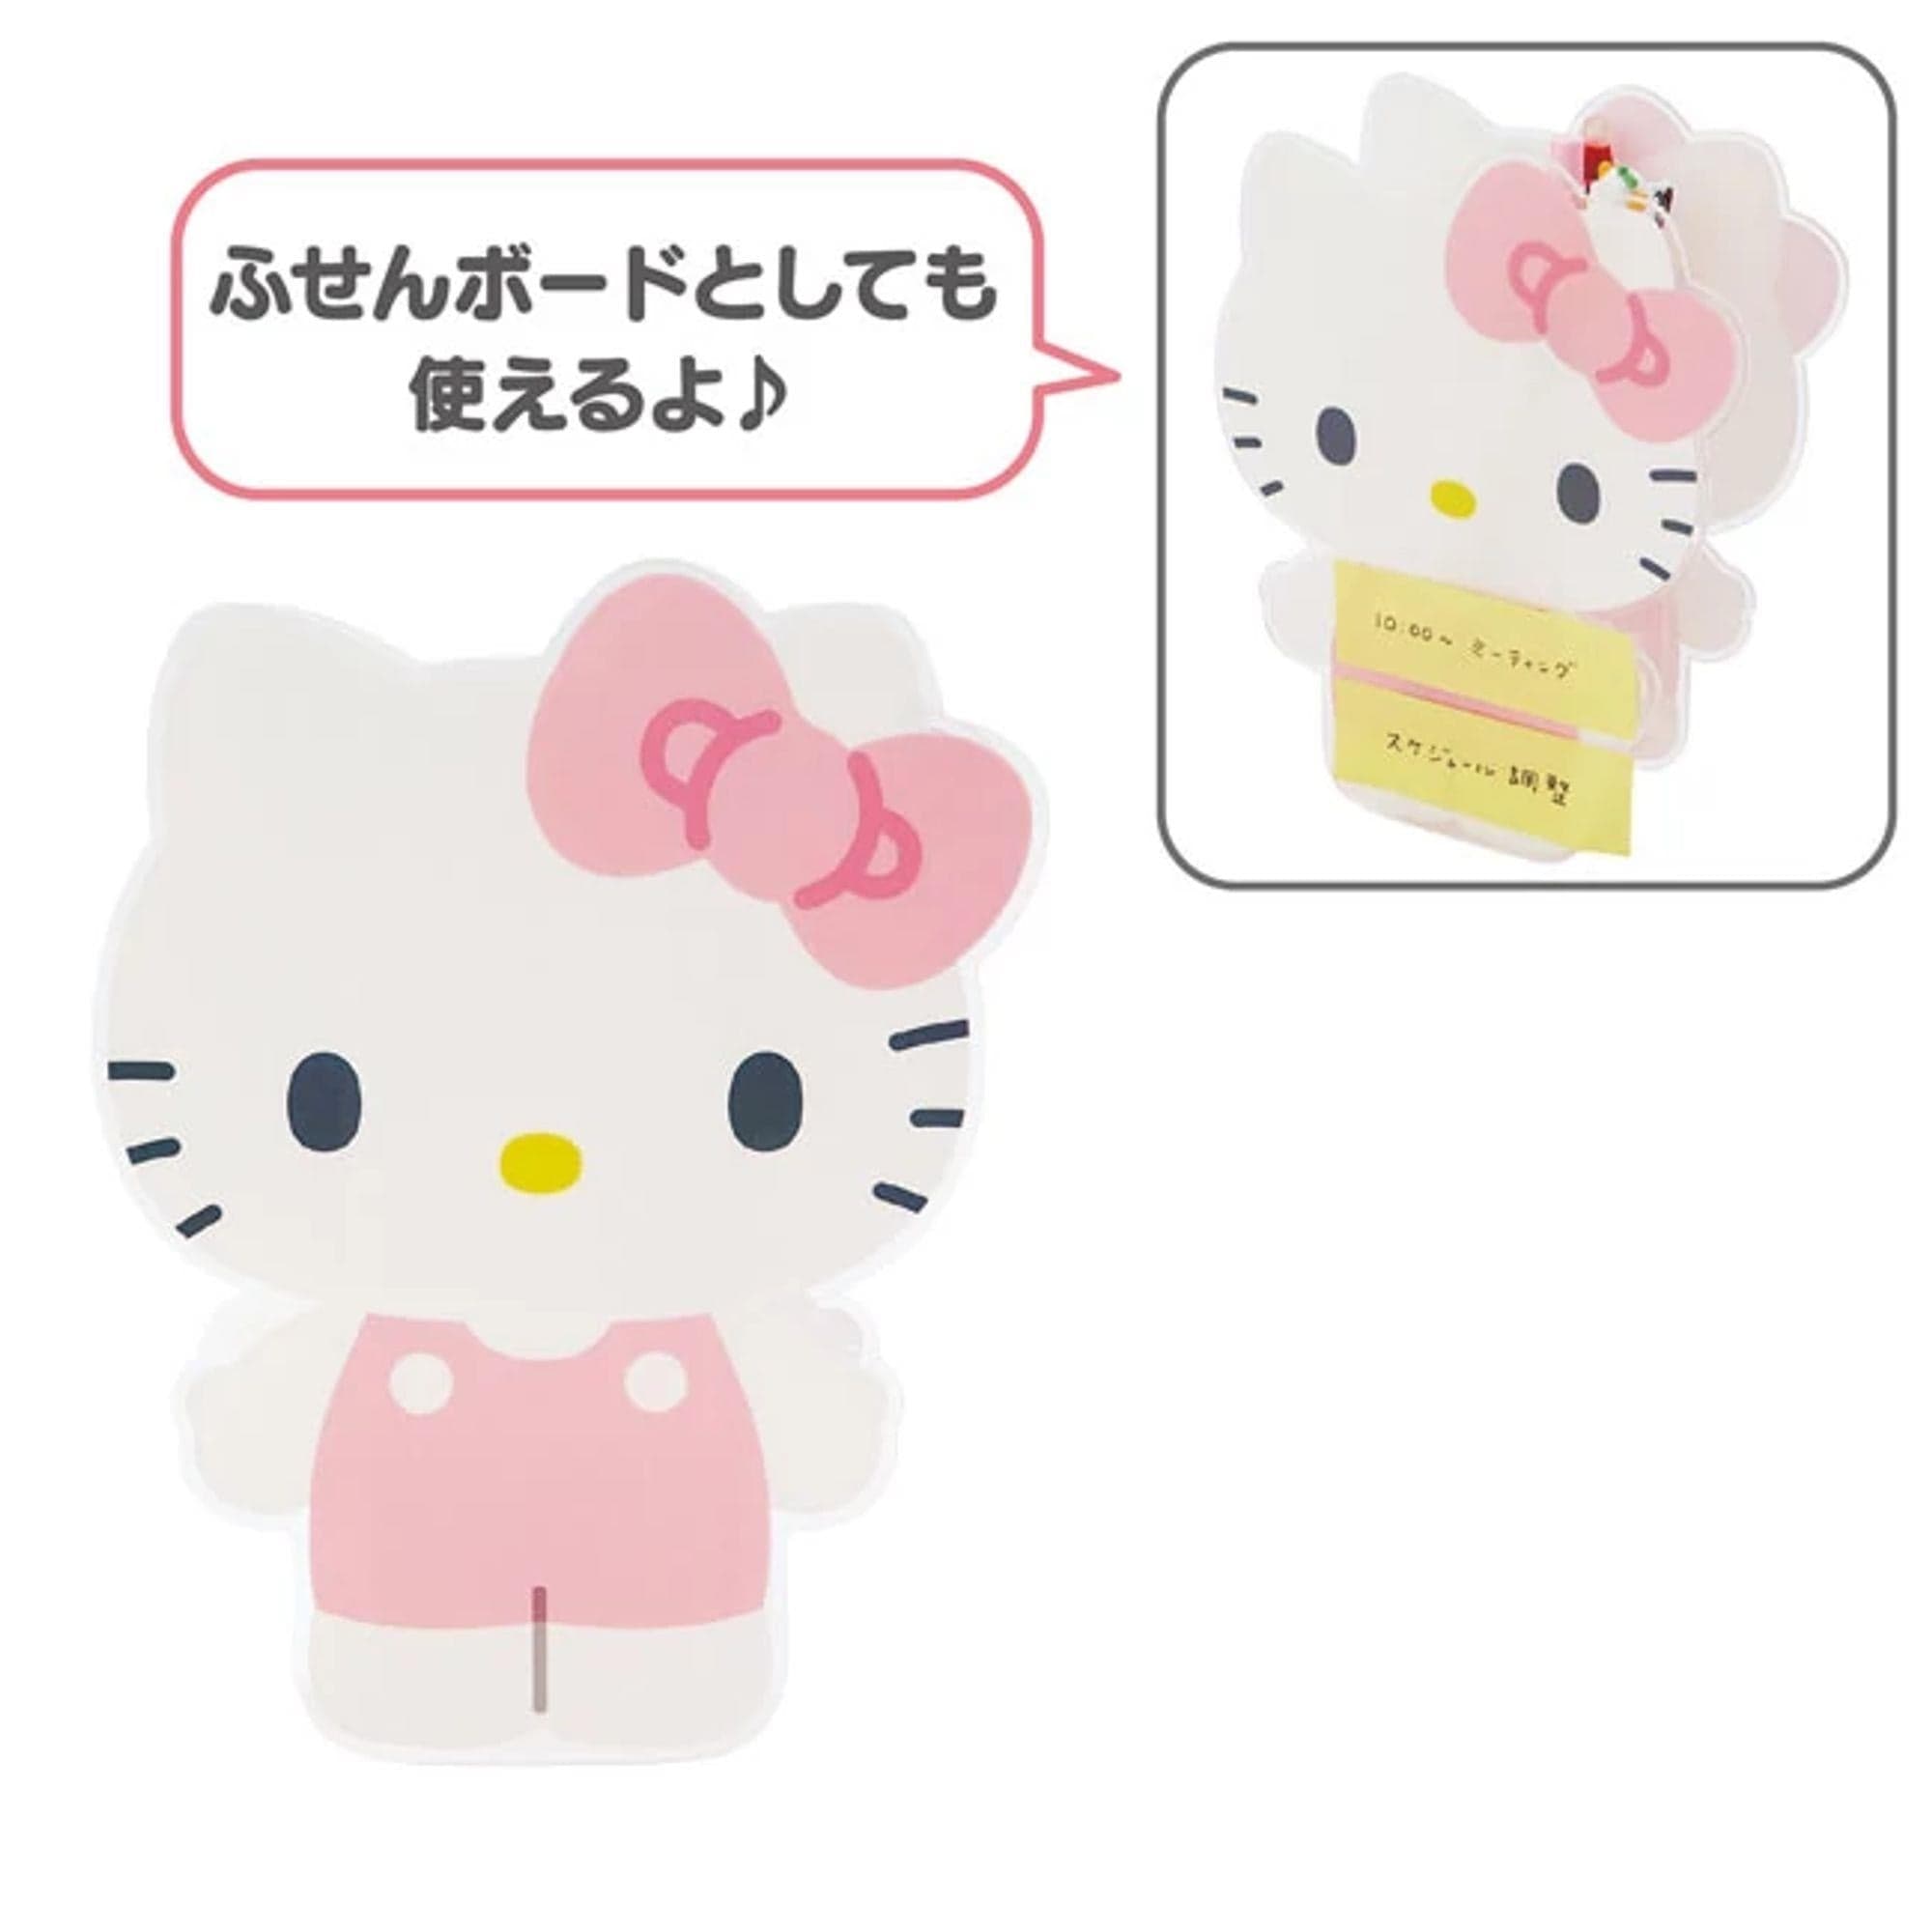 Enesco Sanrio Diecut Acrylic Pen Stands: Cinnamoroll, Hello Kitty, My Melody, Kuromi Hello Kitty Kawaii Gifts